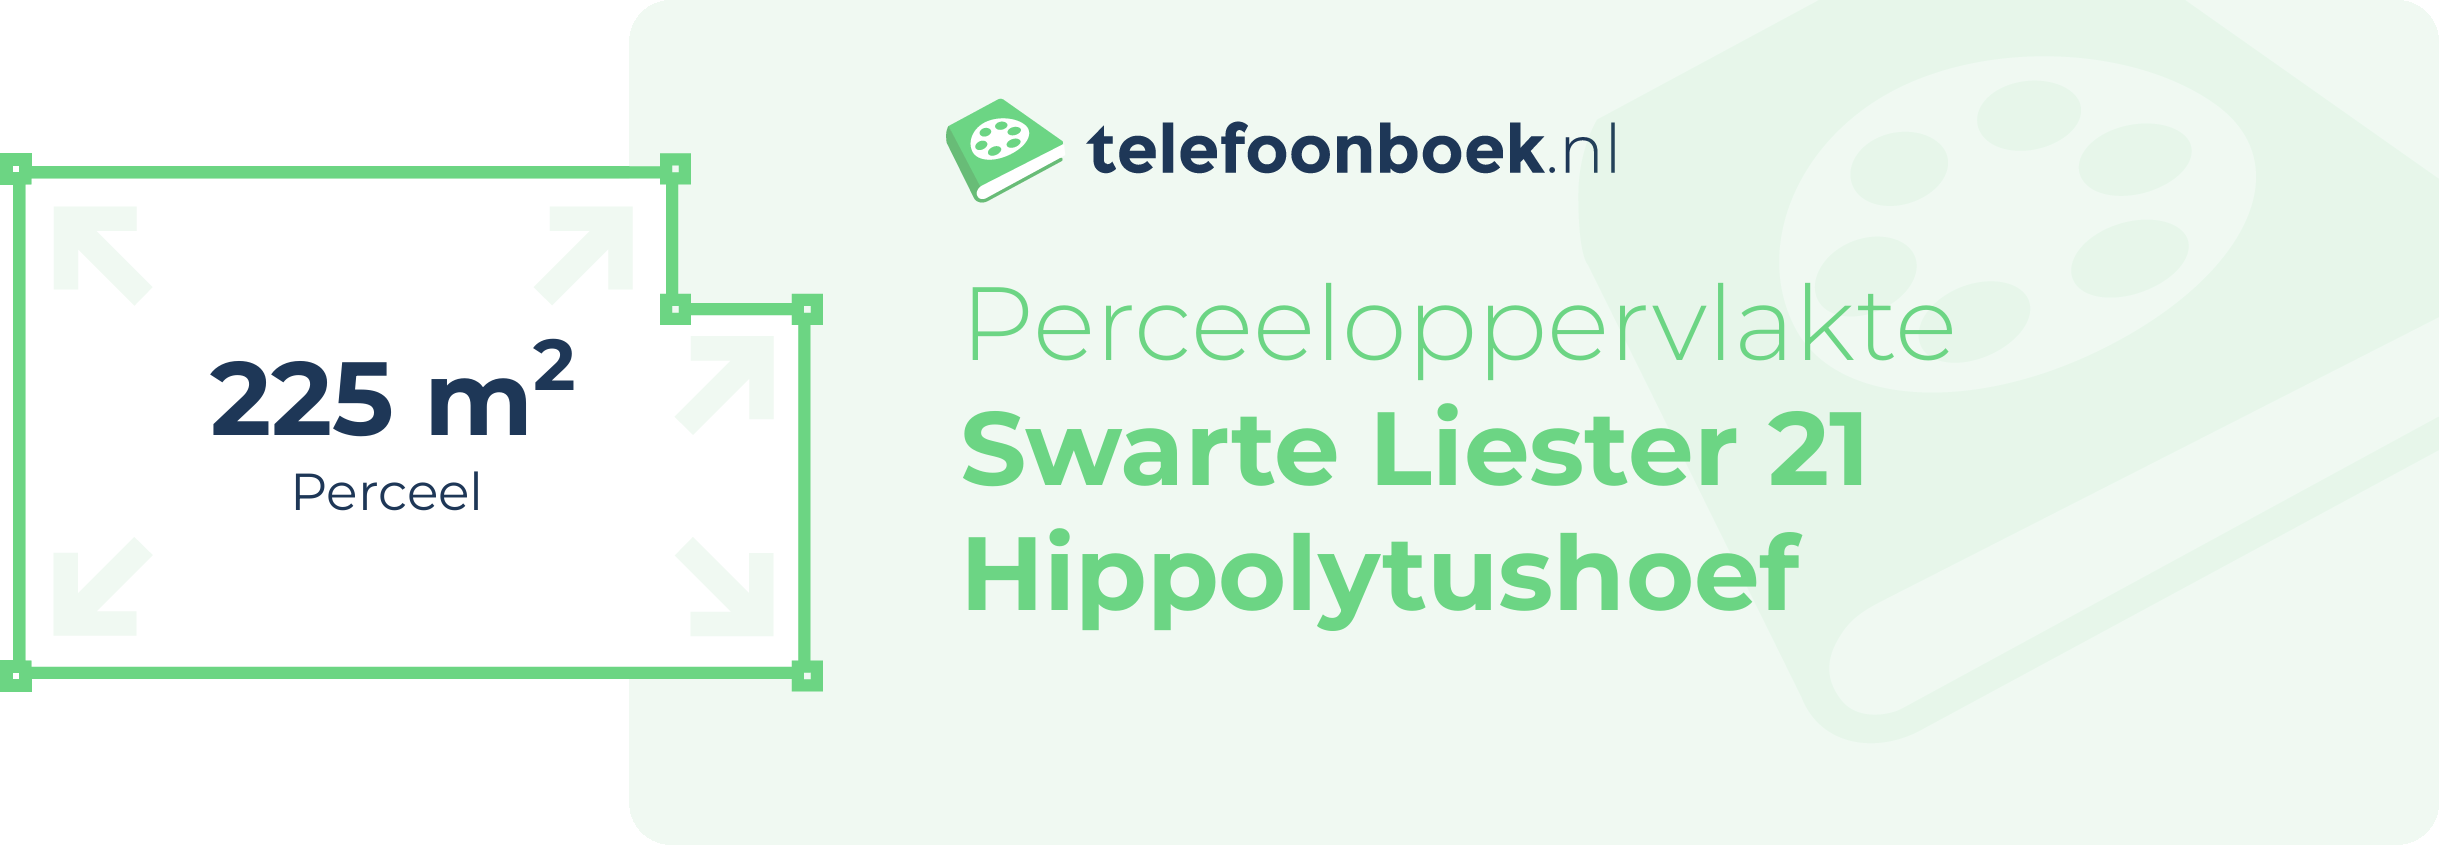 Perceeloppervlakte Swarte Liester 21 Hippolytushoef